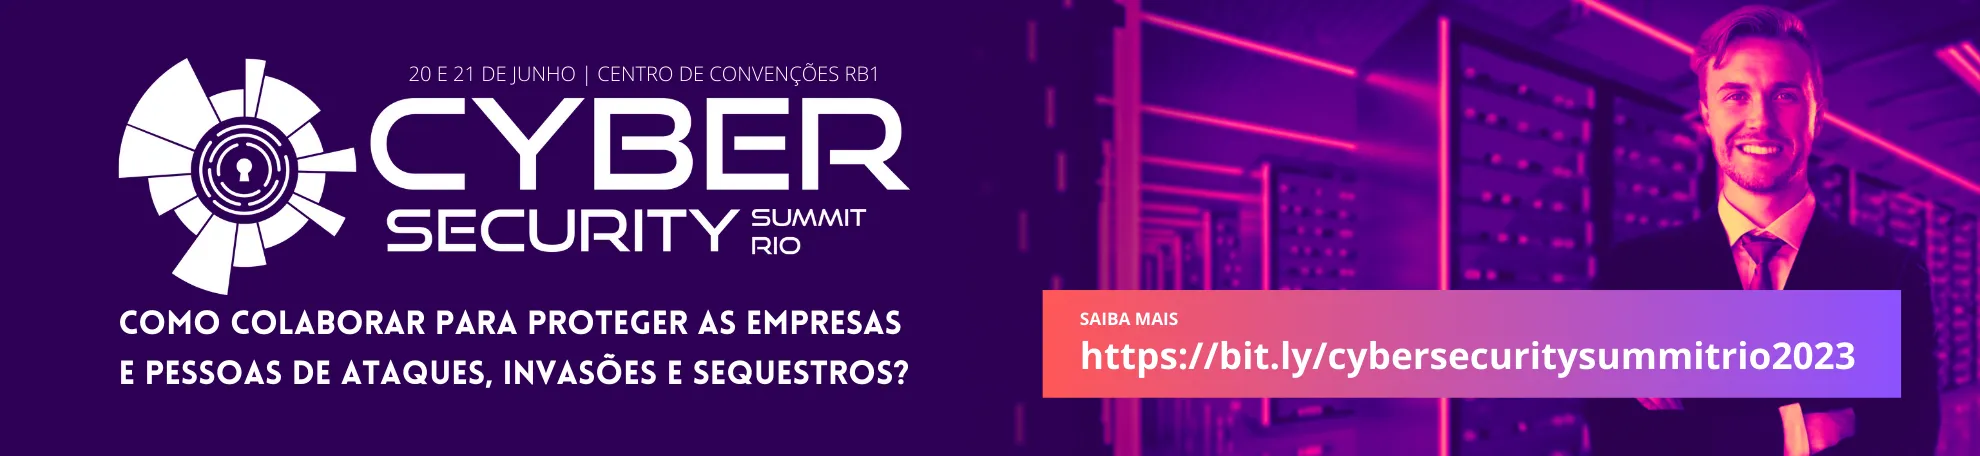 Cybersecurity Summit Rio